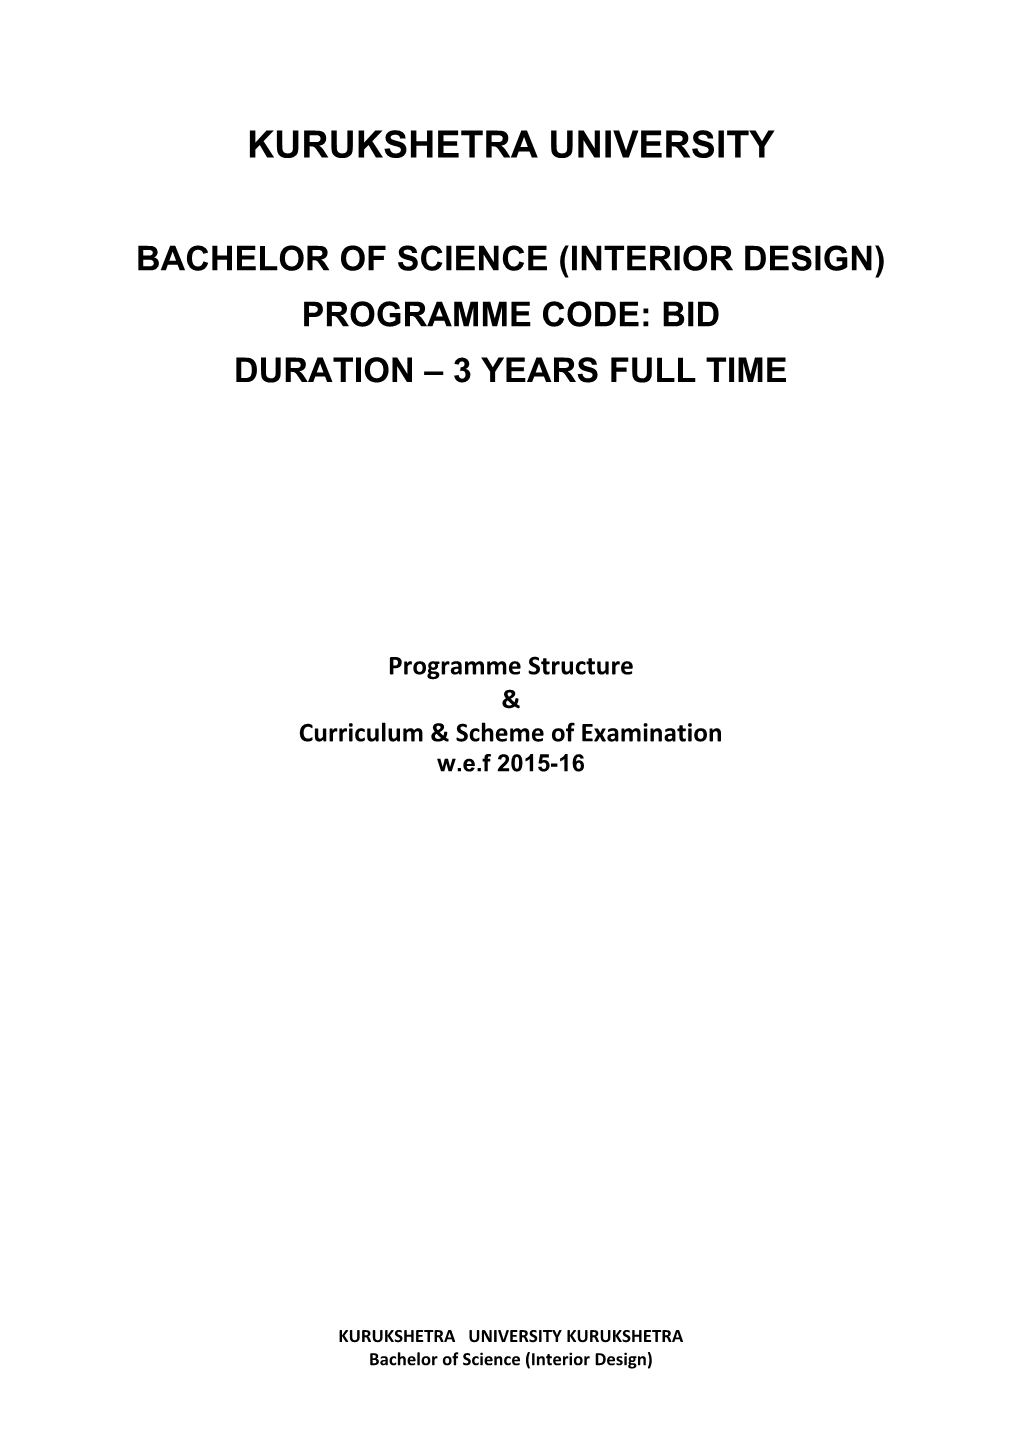 Bachelor of Science (Interior Design)